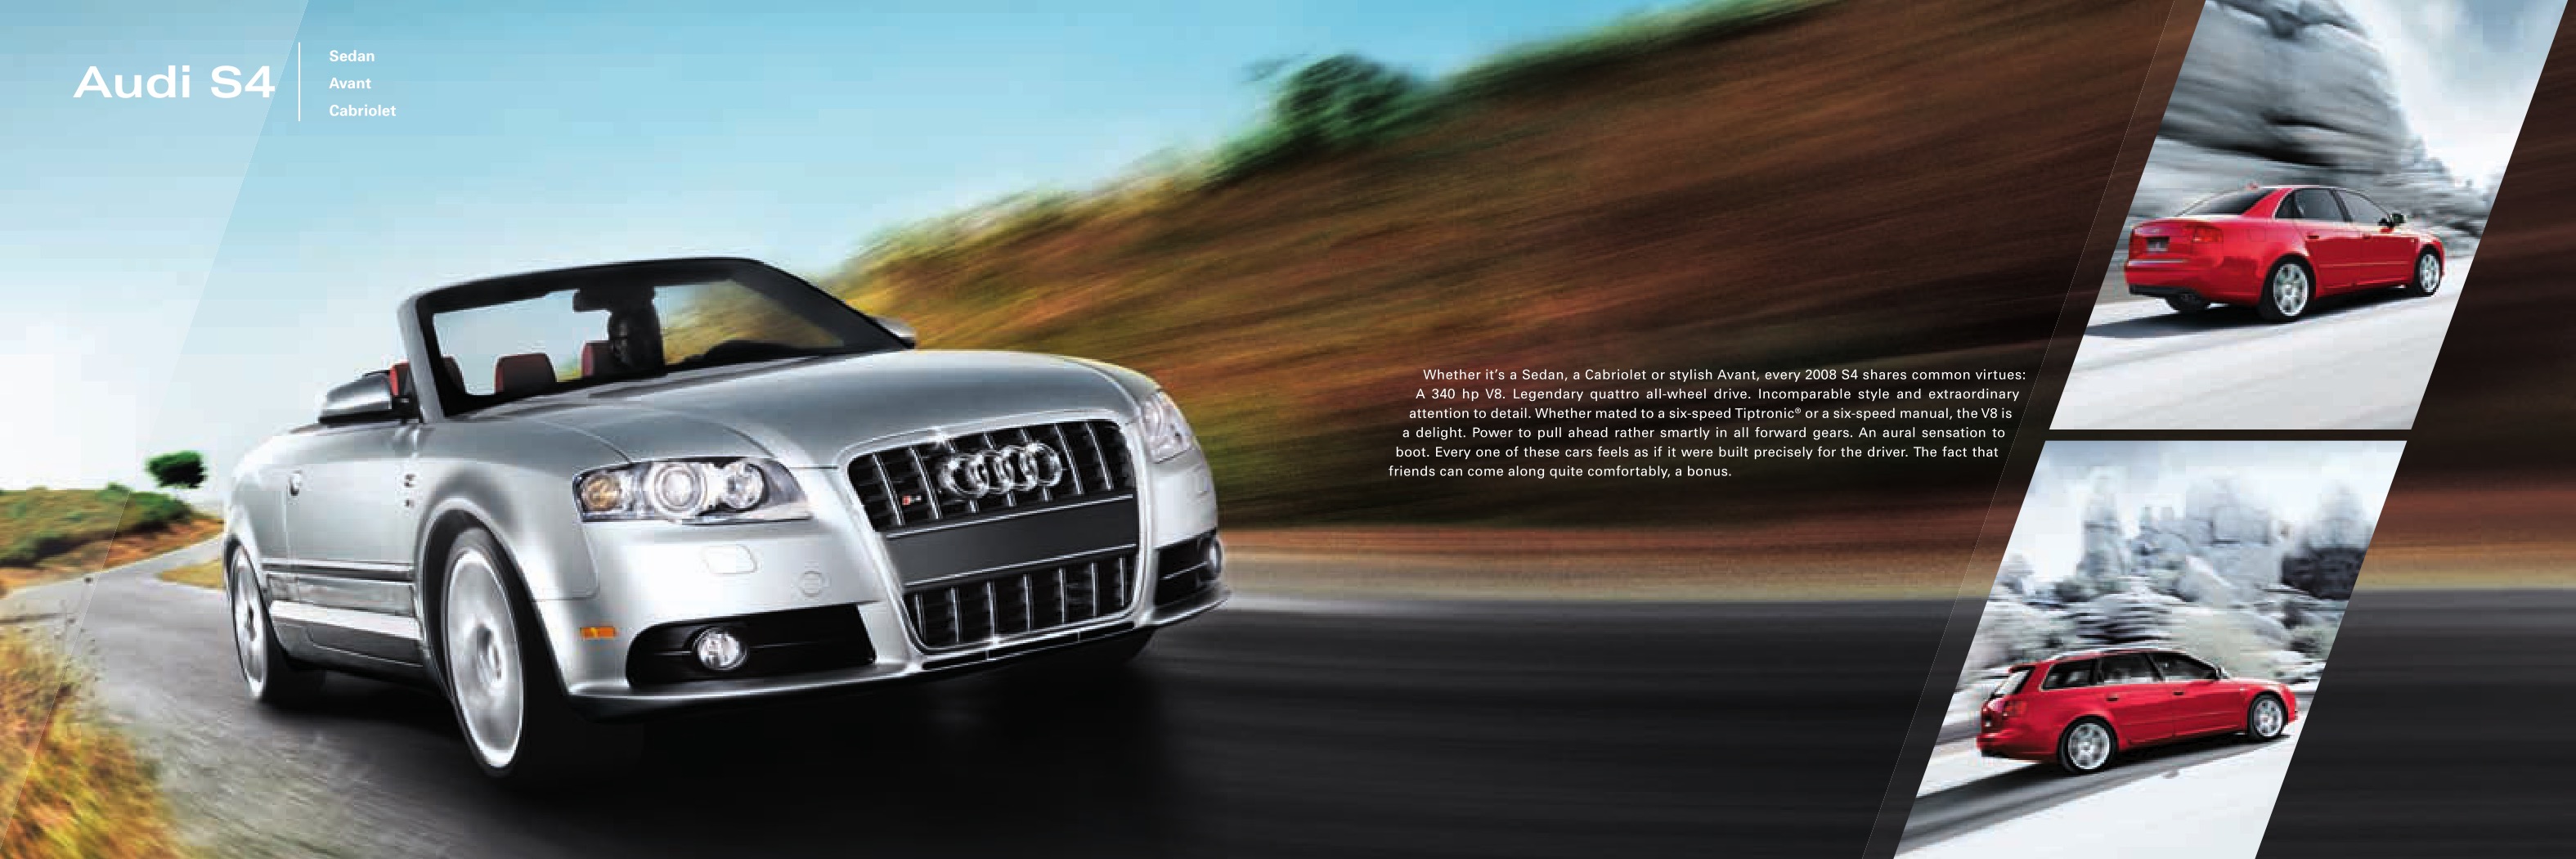 2008 Audi Brochure Page 10